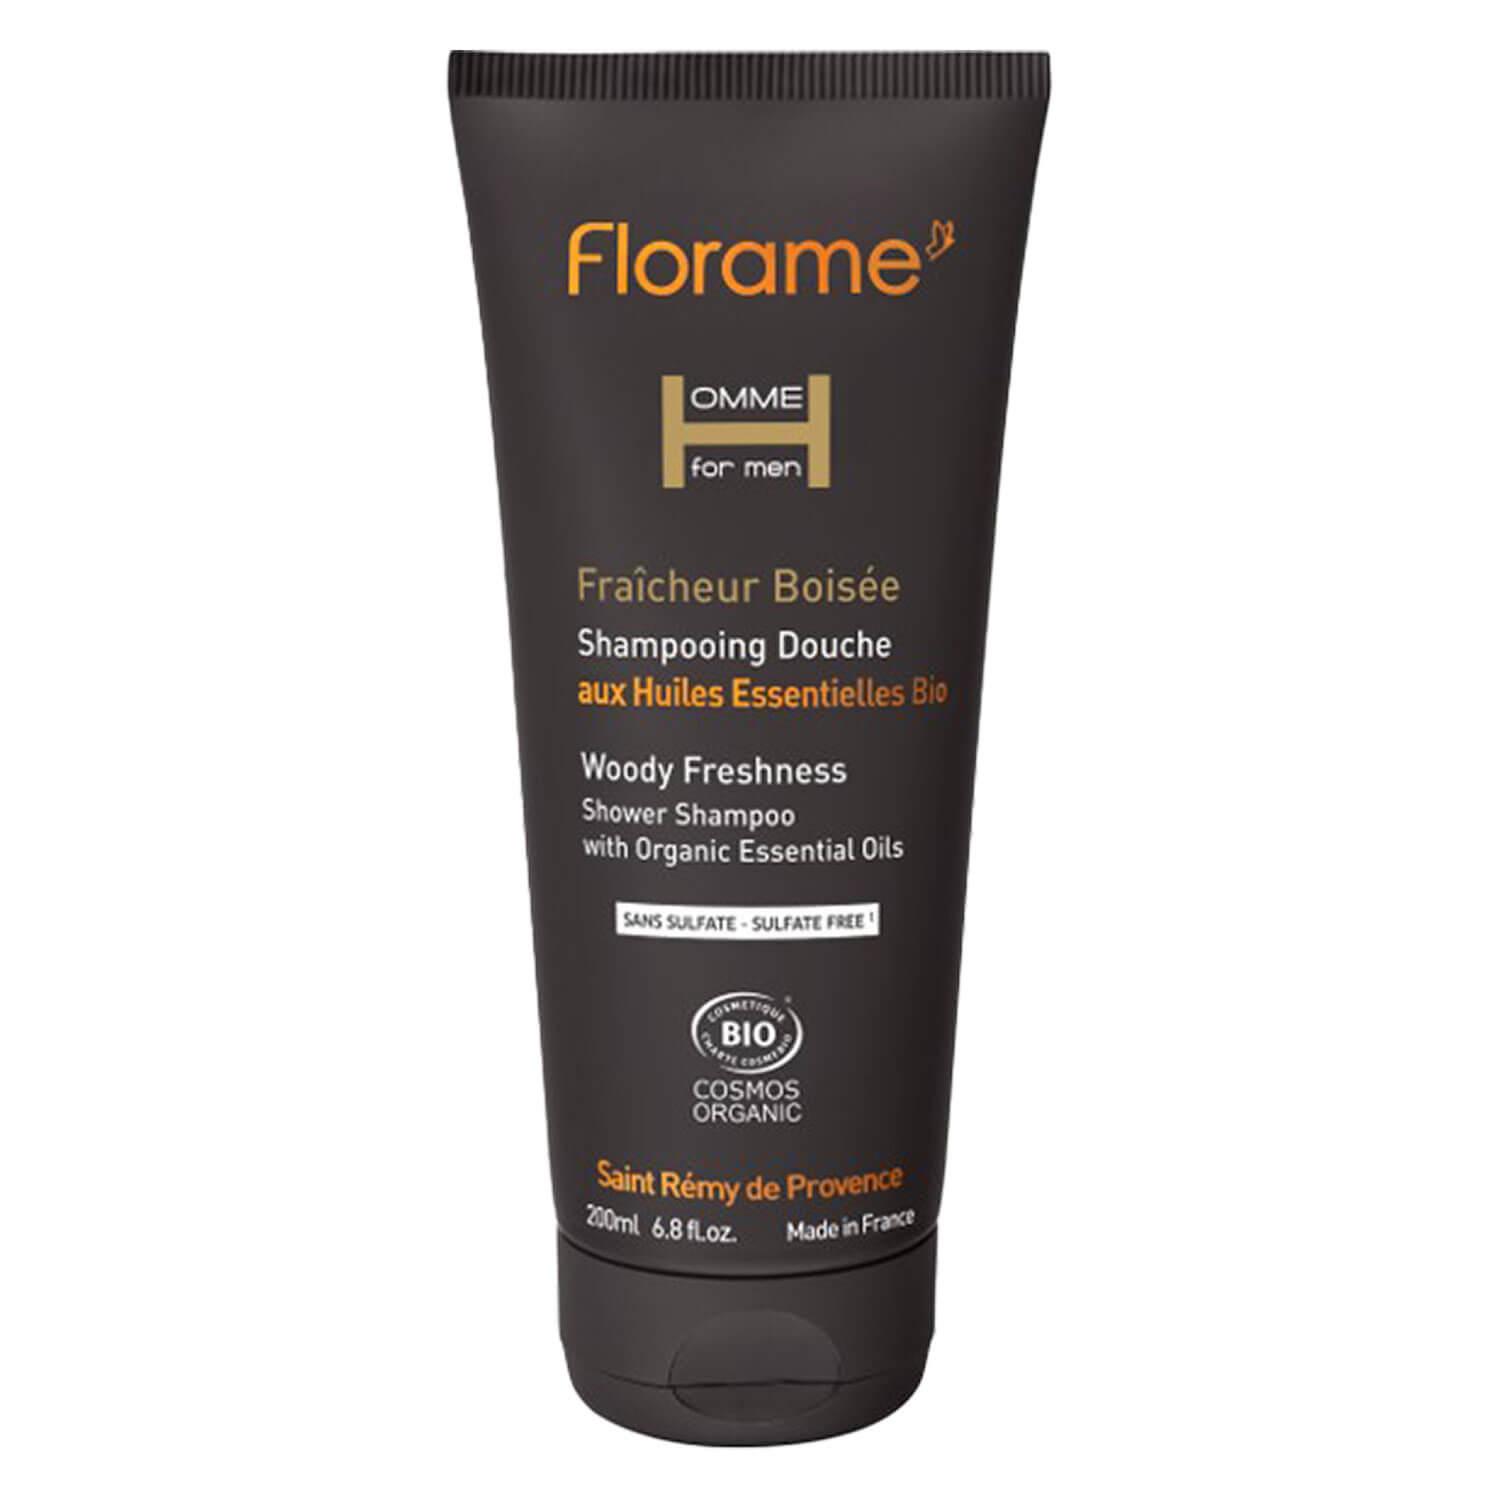 Florame Homme - Woody Freshness Shower Shampoo